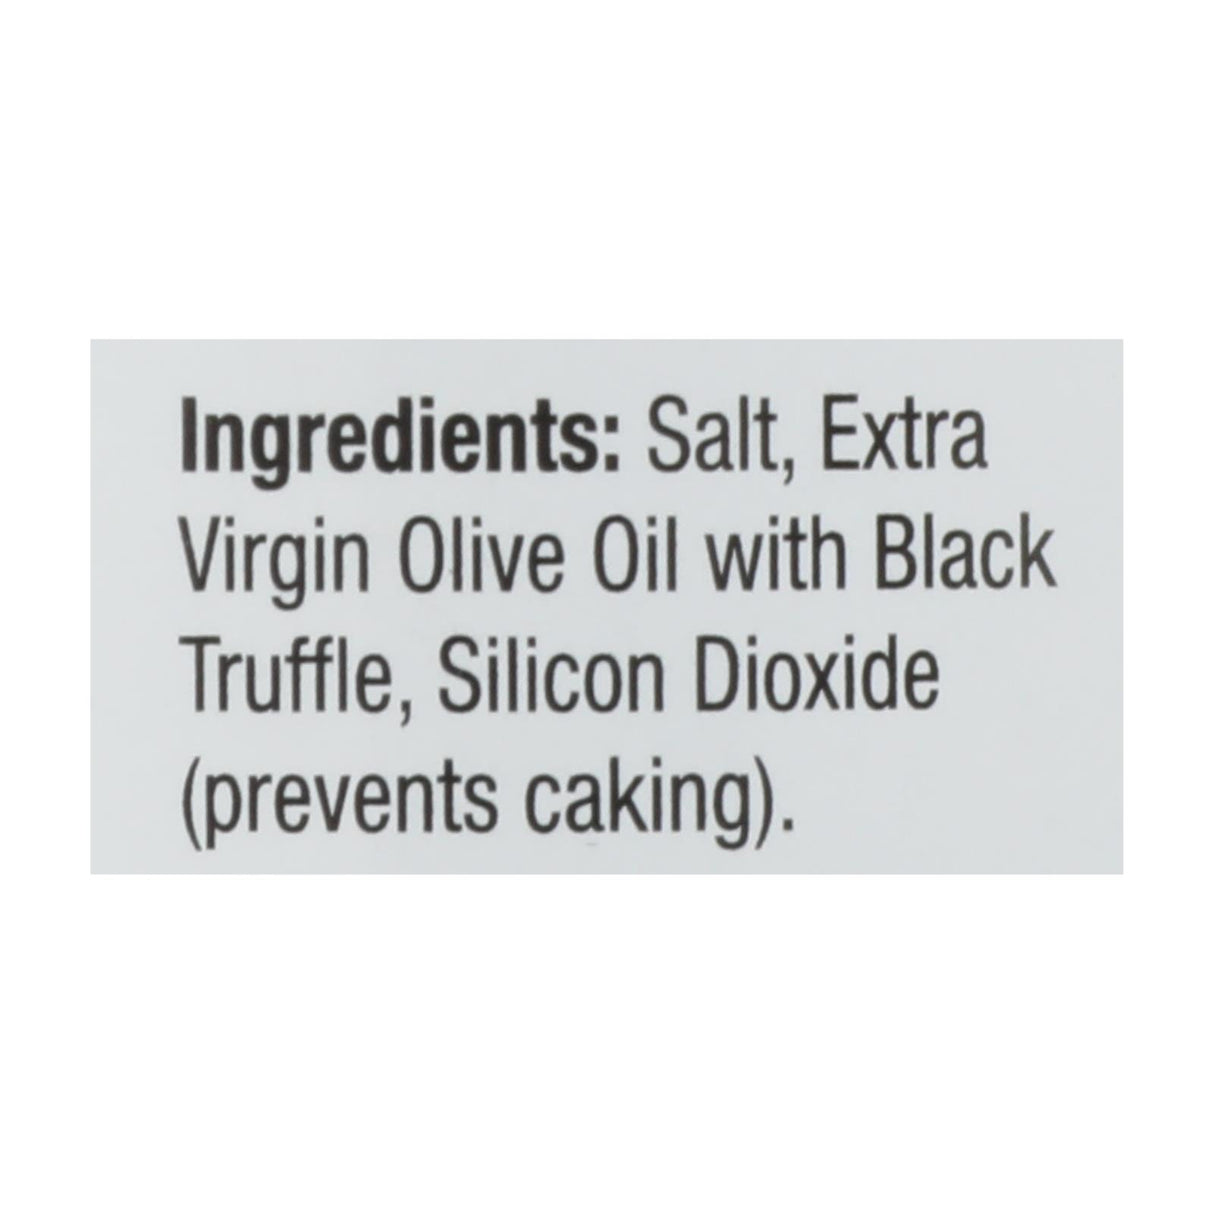 Badia Spices - Salt Black Truffle Sea - Case Of 6 - 9 Oz - Cozy Farm 